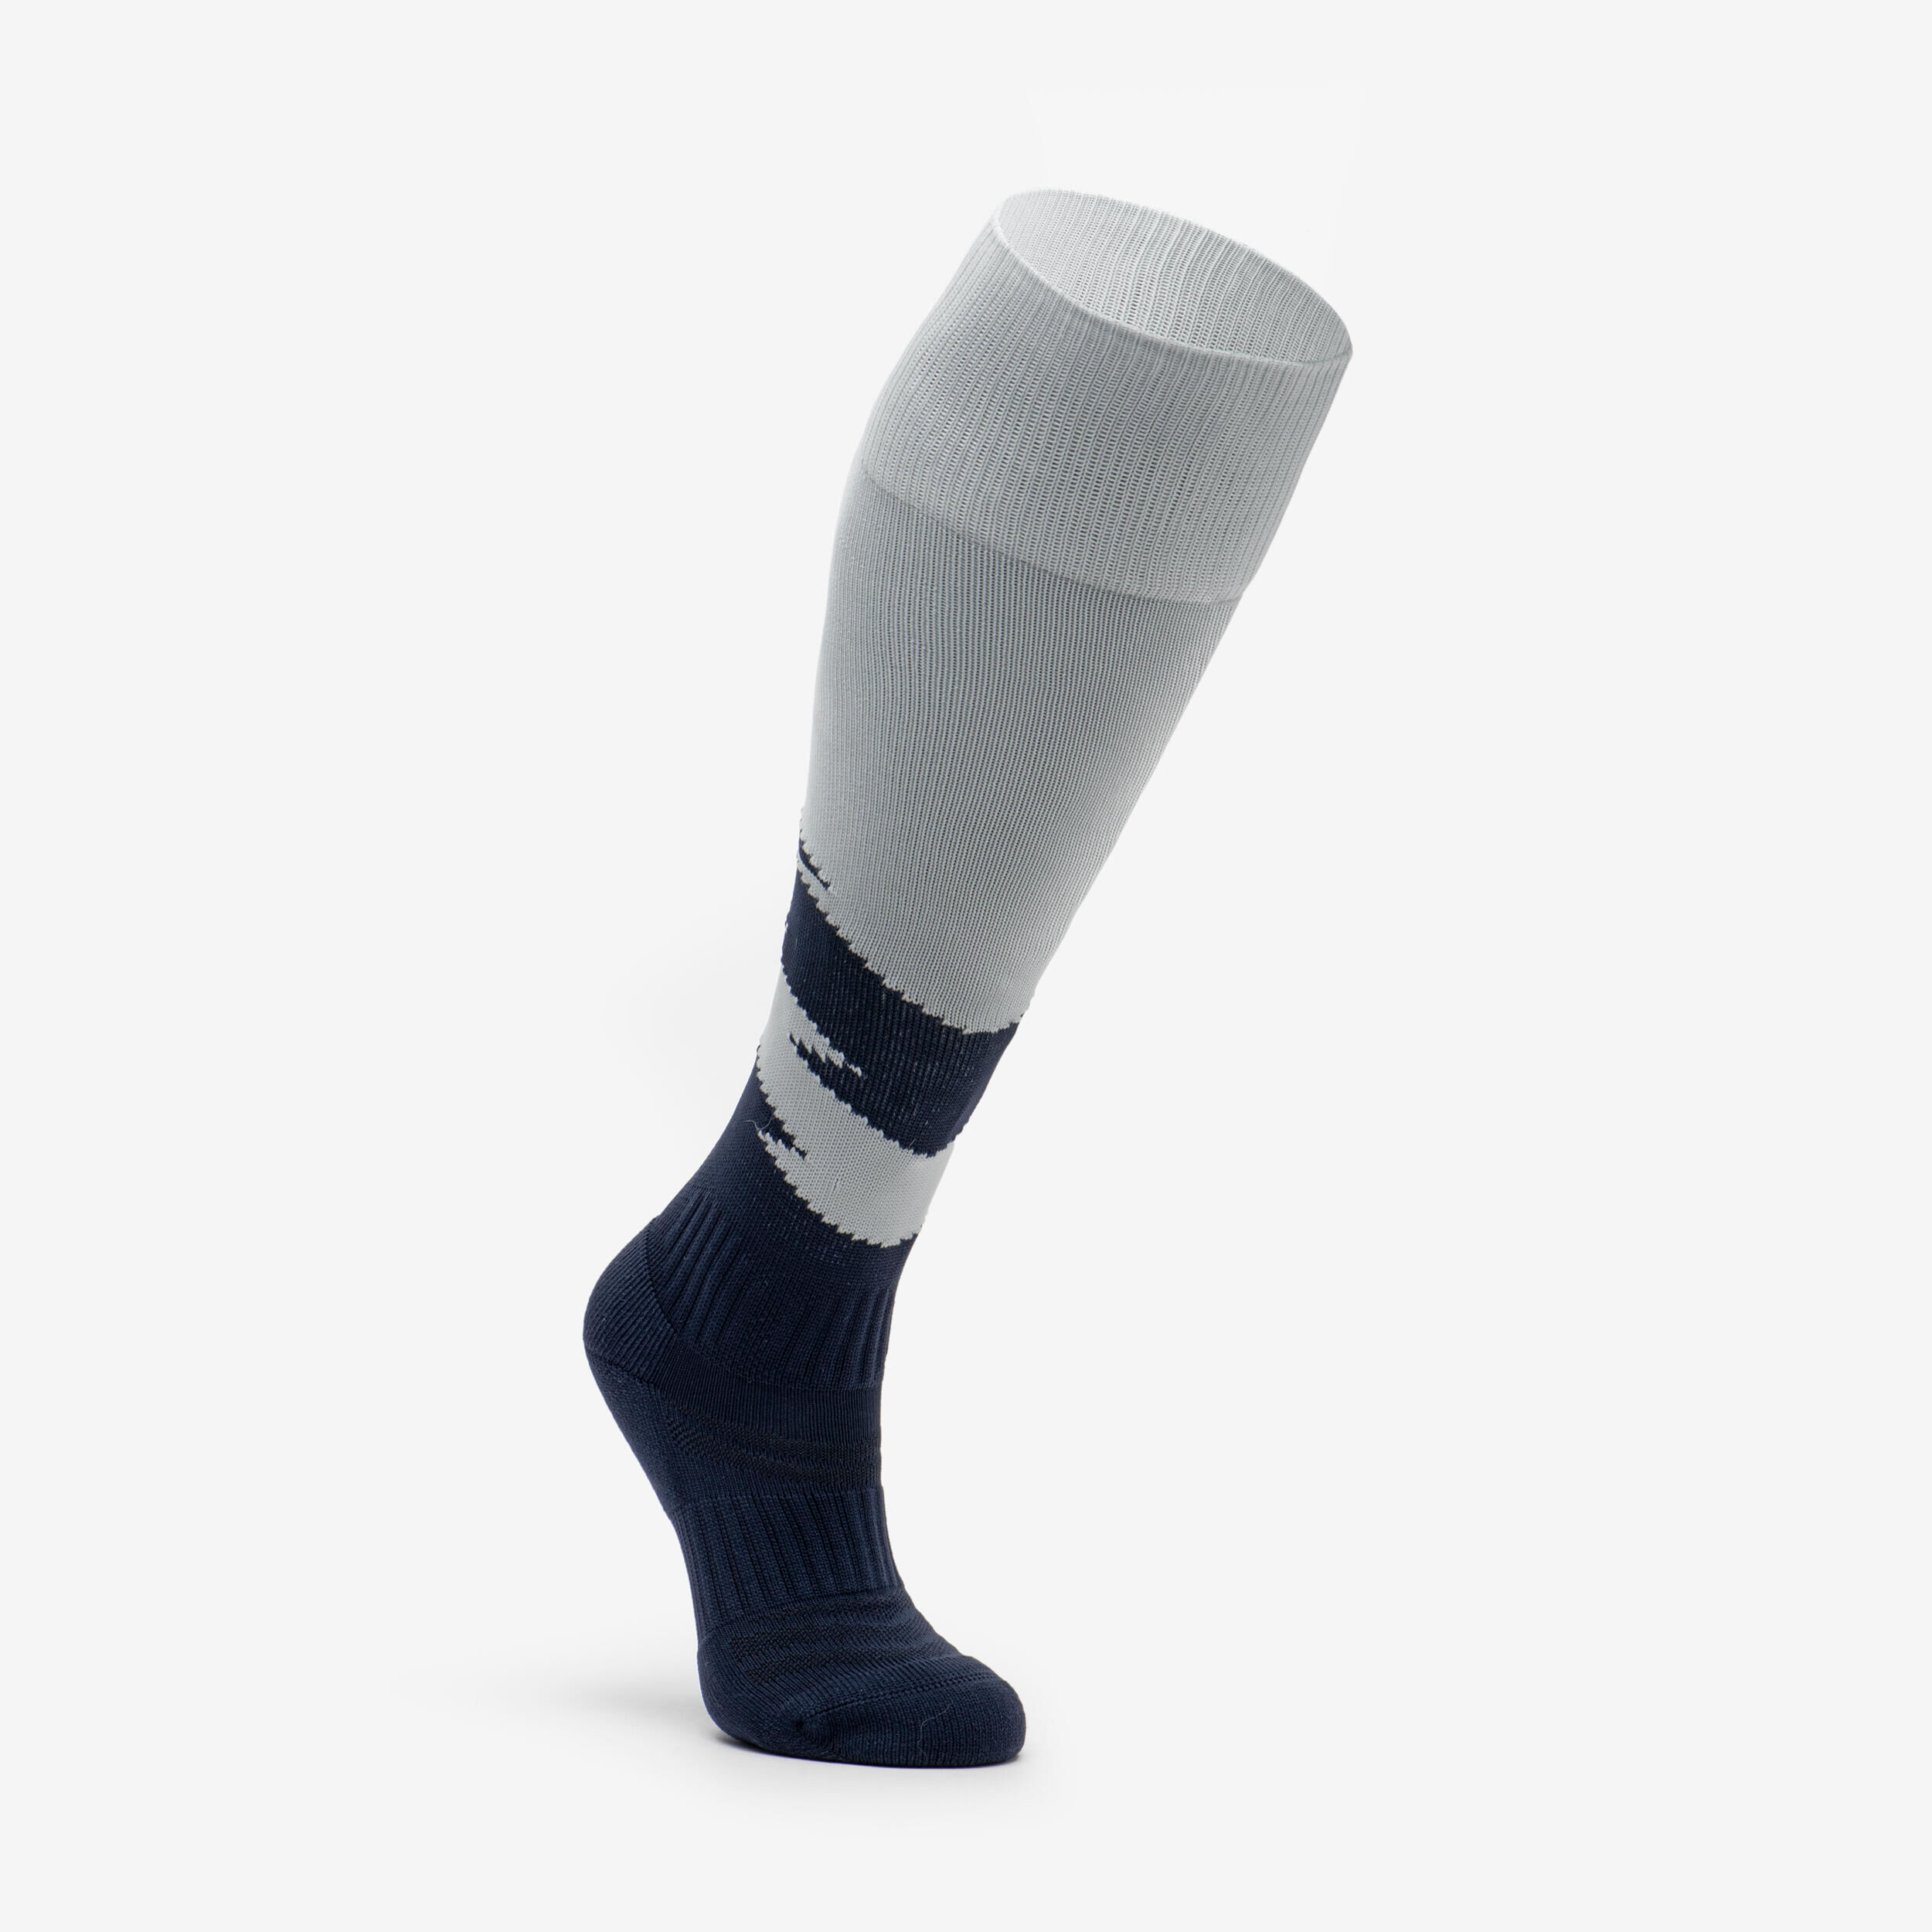 KIPSTA Kids' Football Socks - Grey/Navy